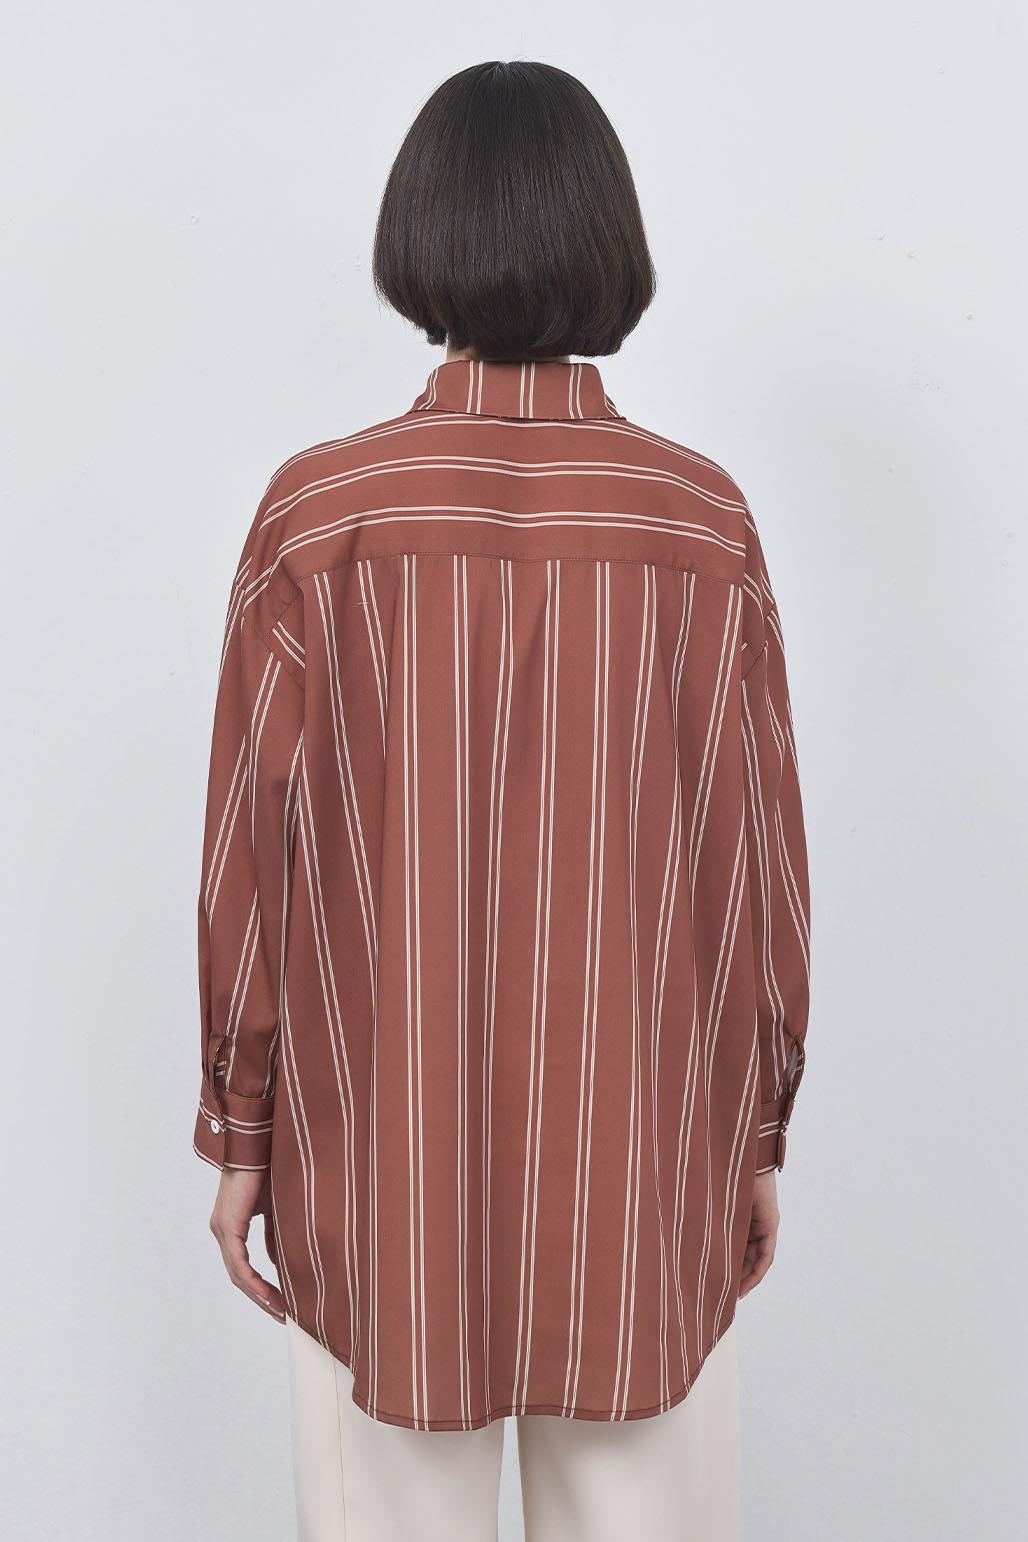 Hupe Striped Shirt Brown